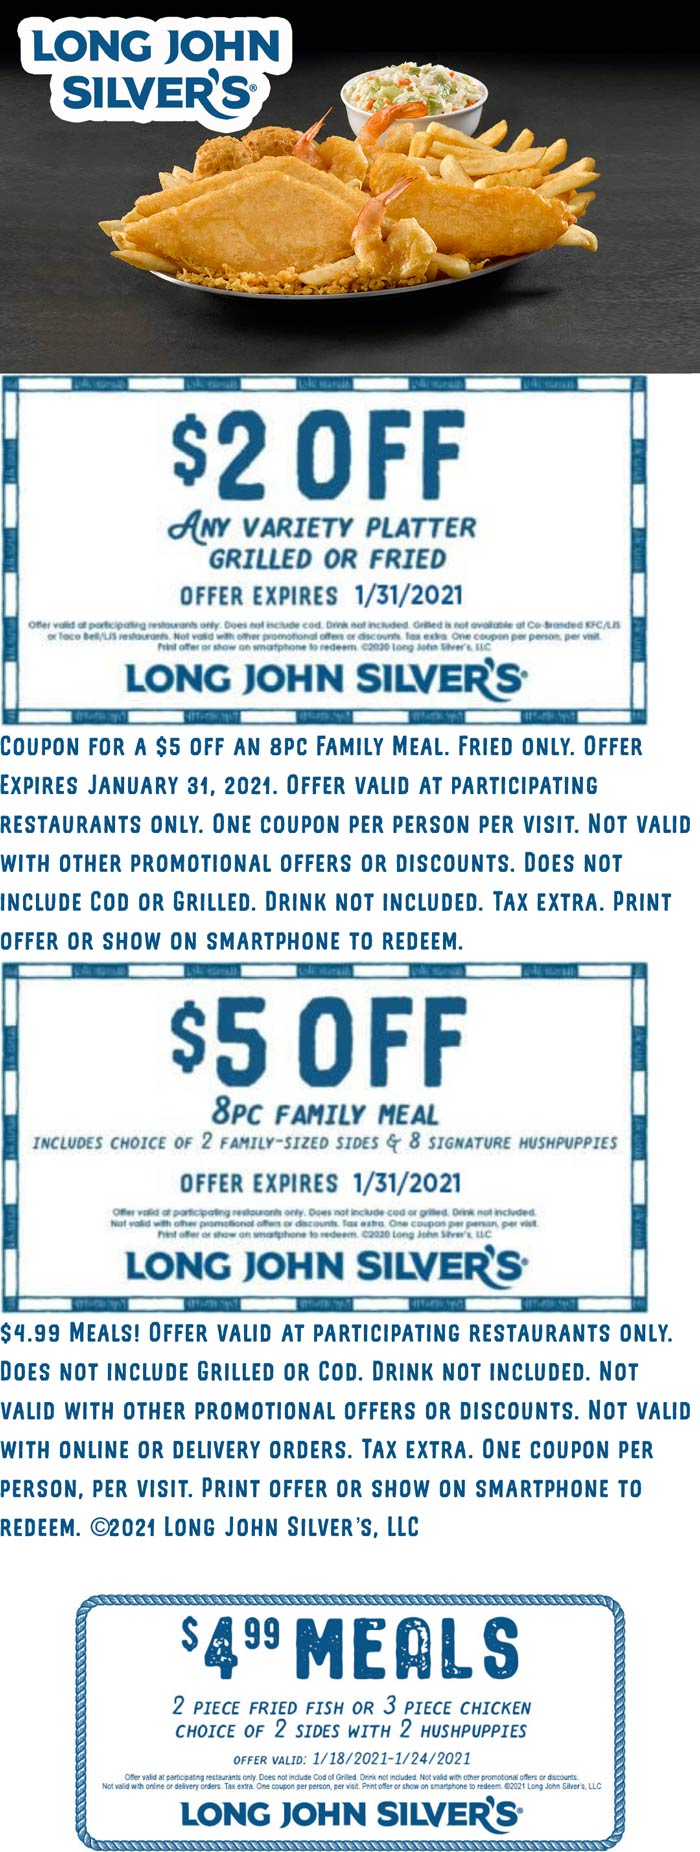 Long John Silvers restaurants Coupon  $5 off, $5 meals & more at Long John Silvers restaurants #longjohnsilvers 